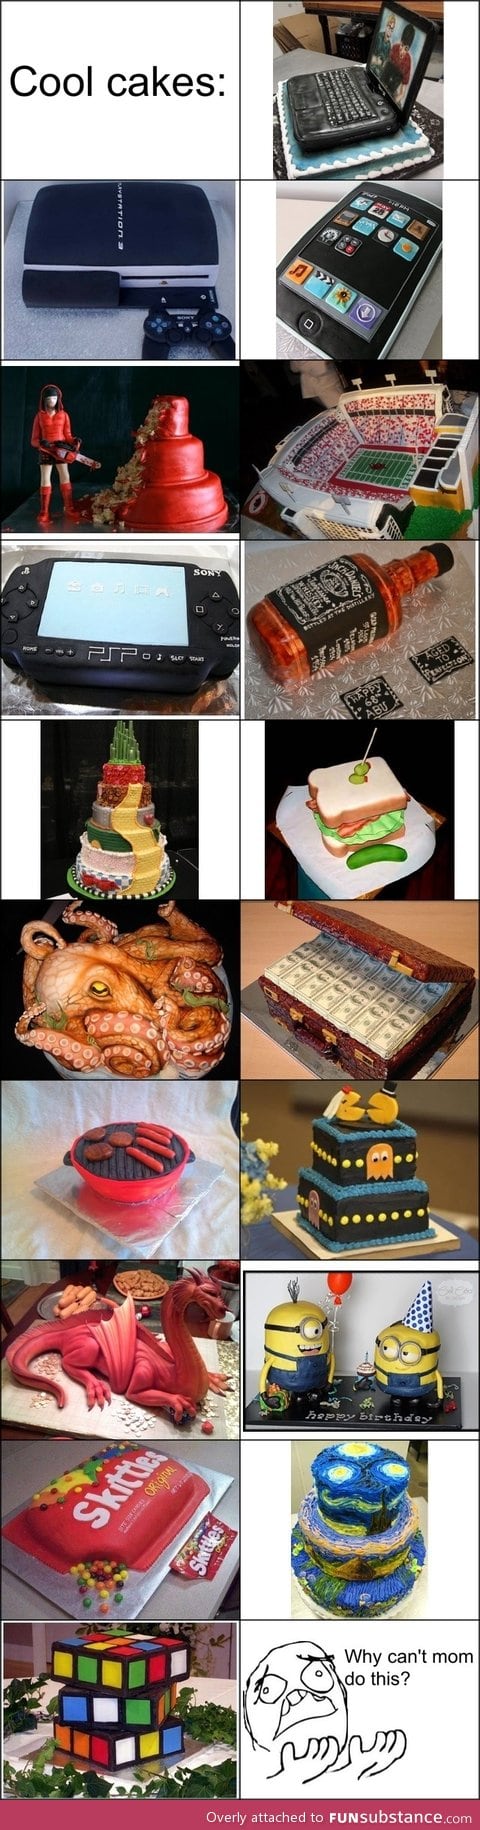 Epic cakes